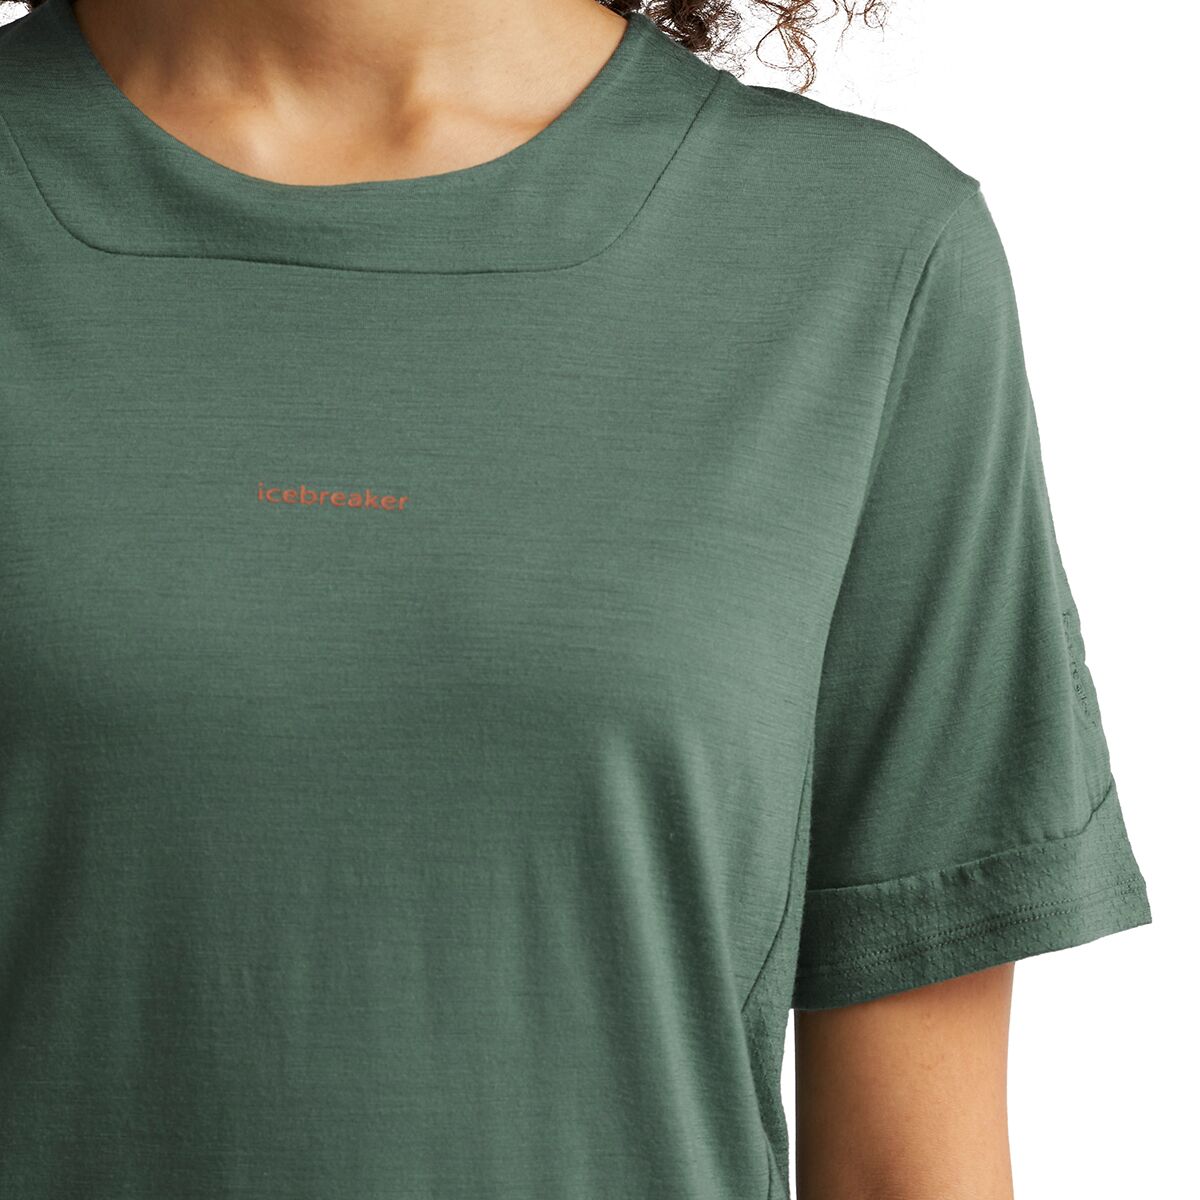 Icebreaker ZoneKnit Short-Sleeve T-Shirt - Women's - Women